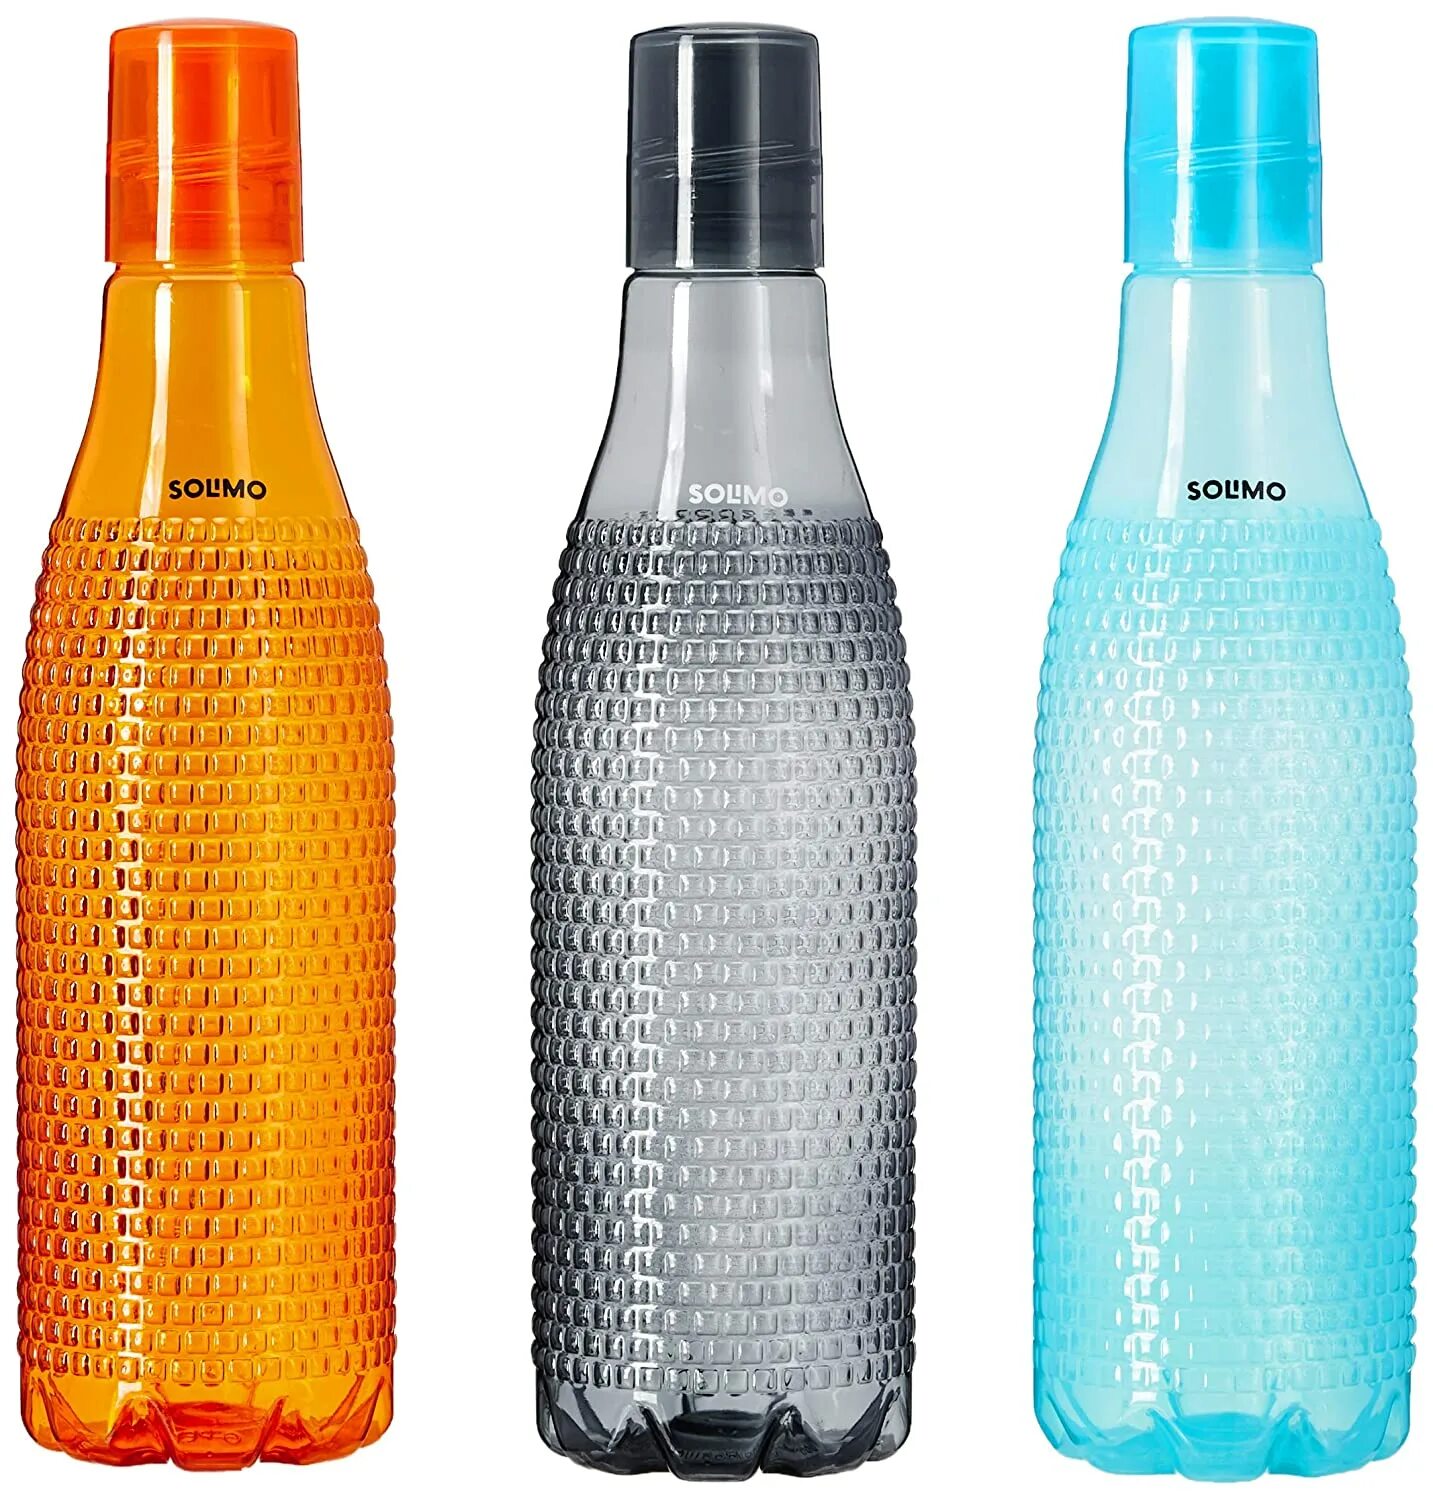 Цветные бутылочки. Цветные бутылки. Разноцветные бутылочки. Цветные флаконы. Цветные бутыли.